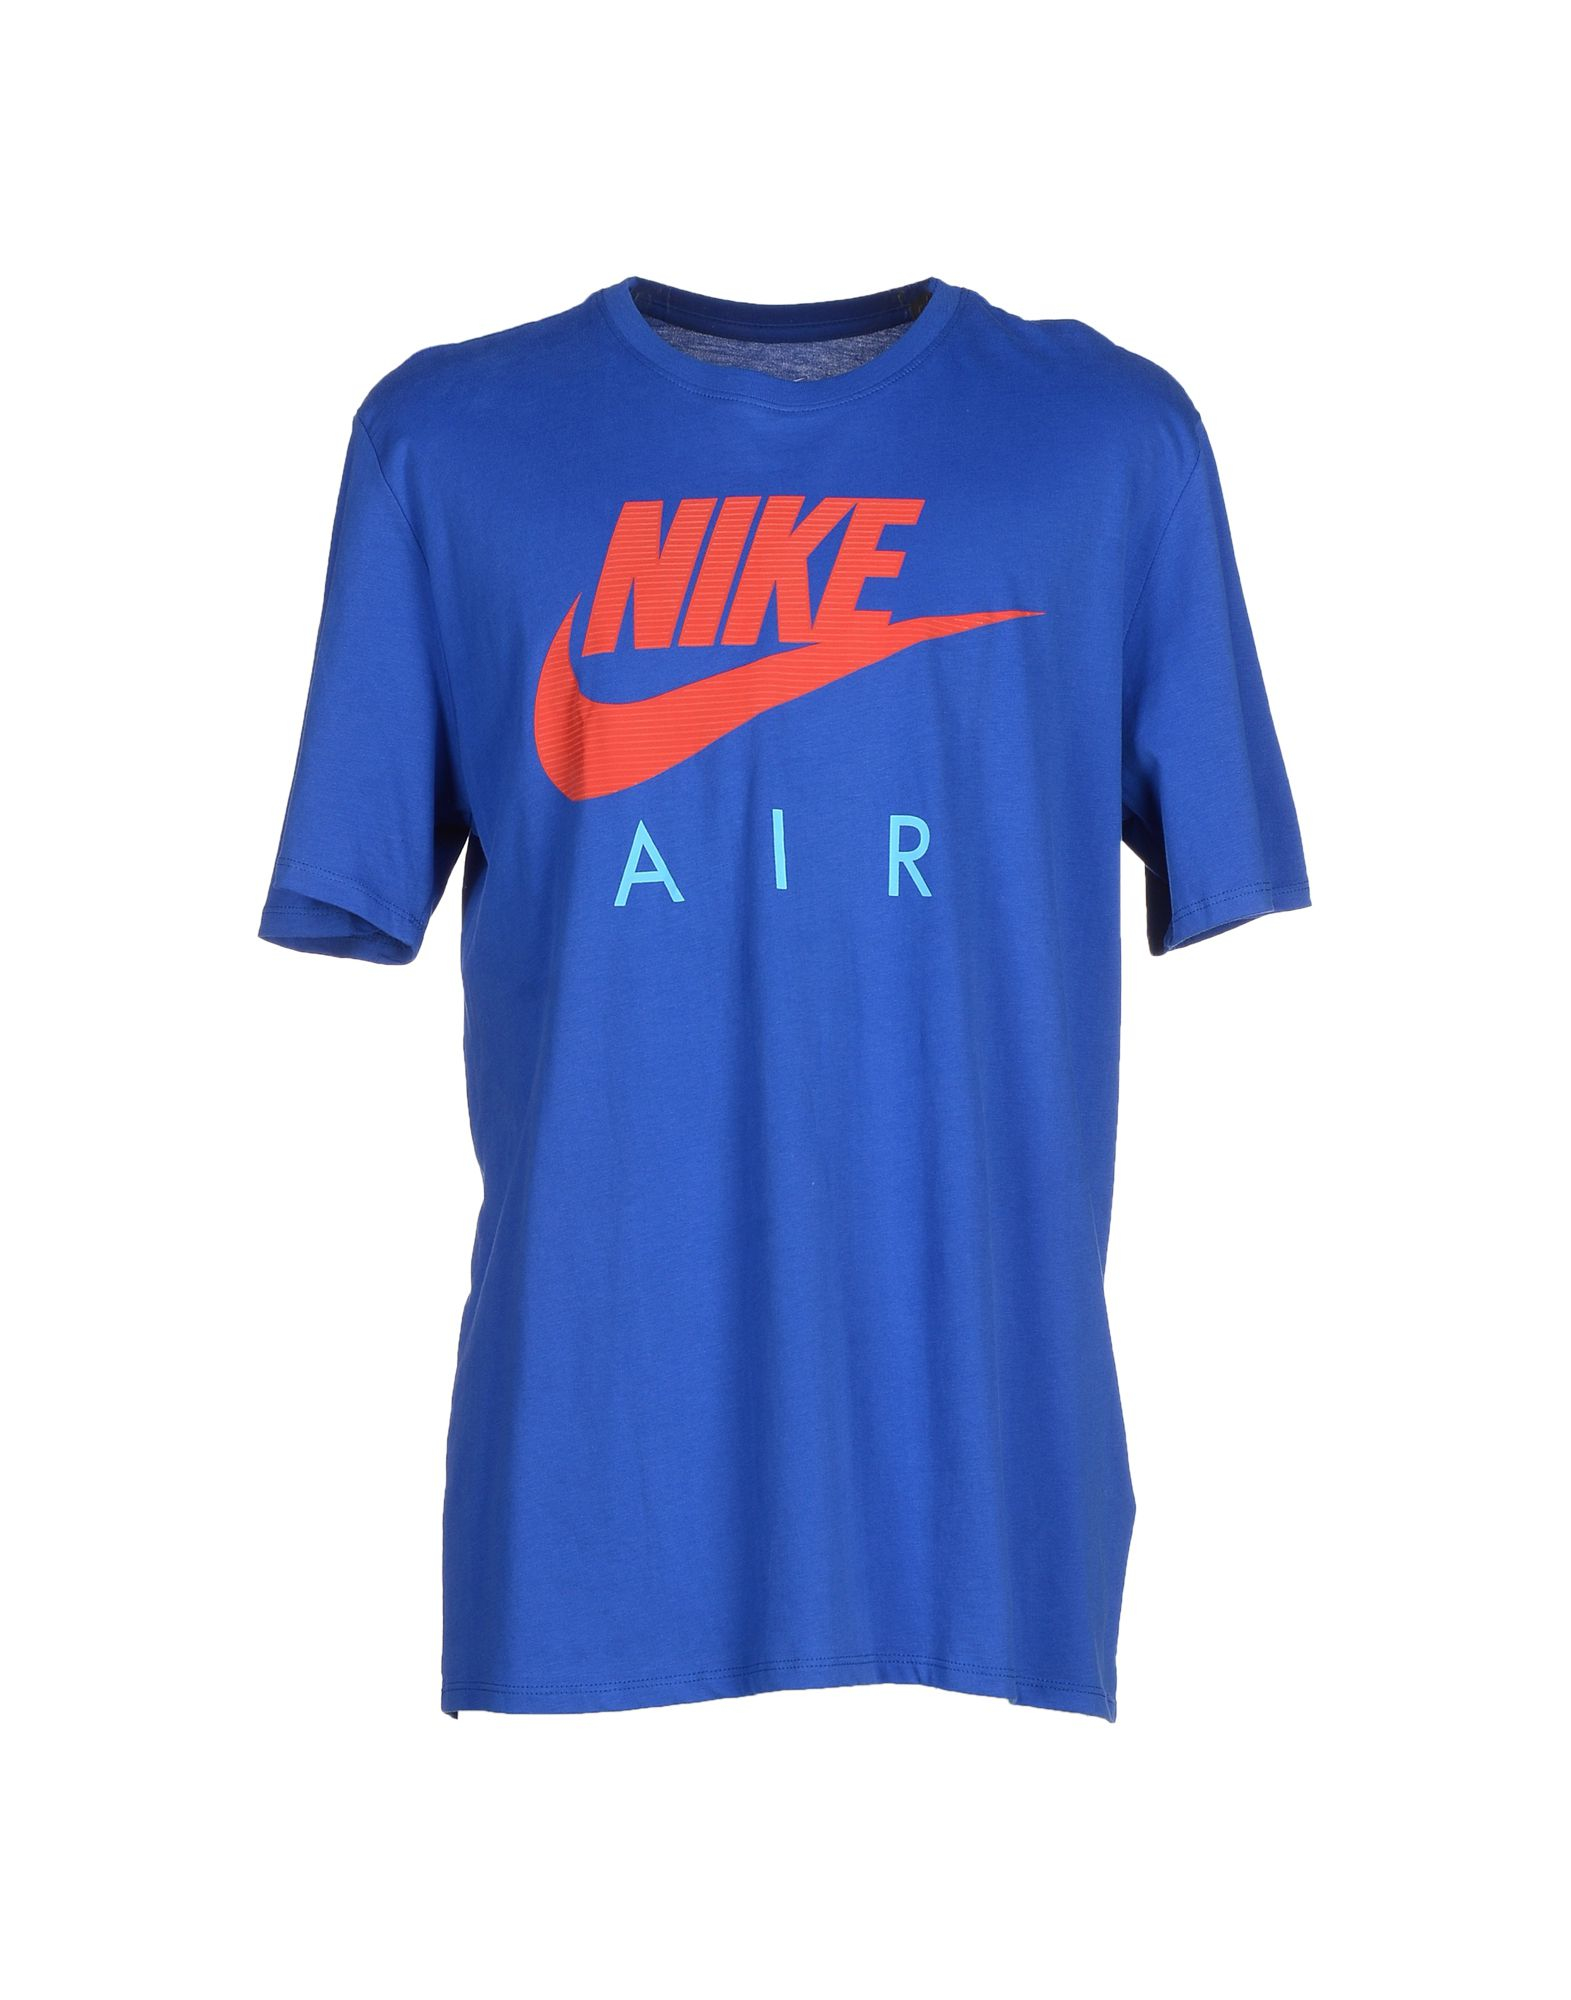 Lyst - Nike T-shirt in Blue for Men